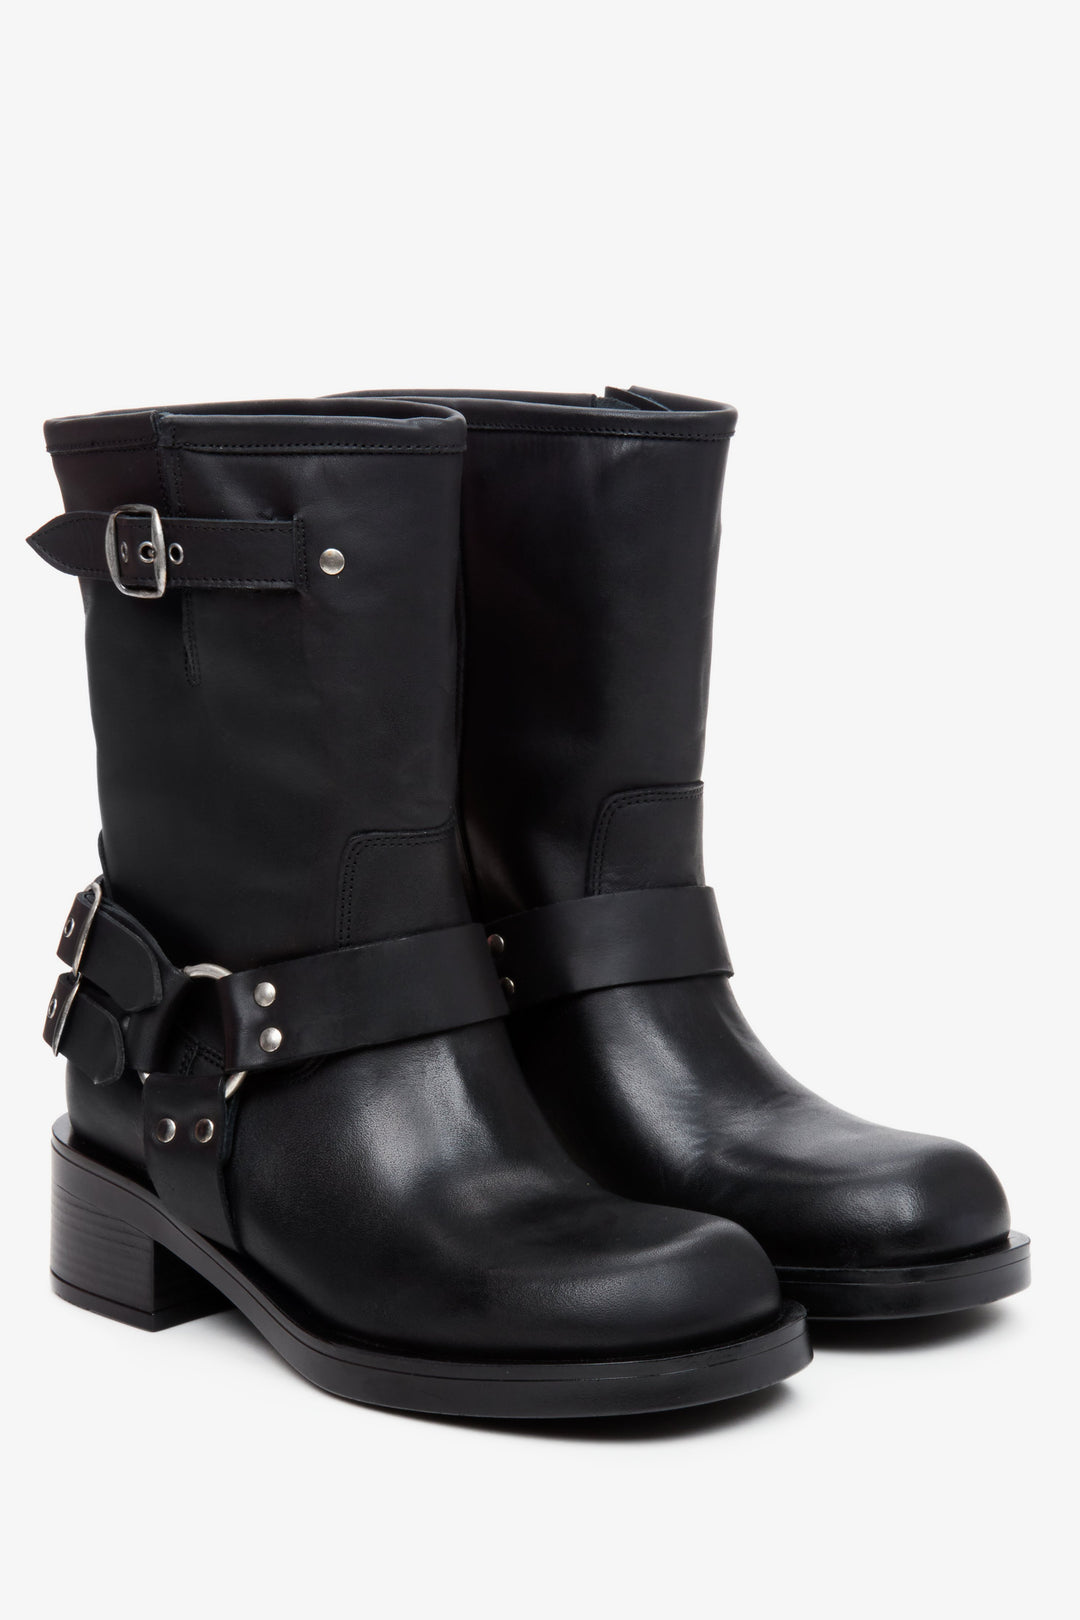 Women's black leather boots by Estro.